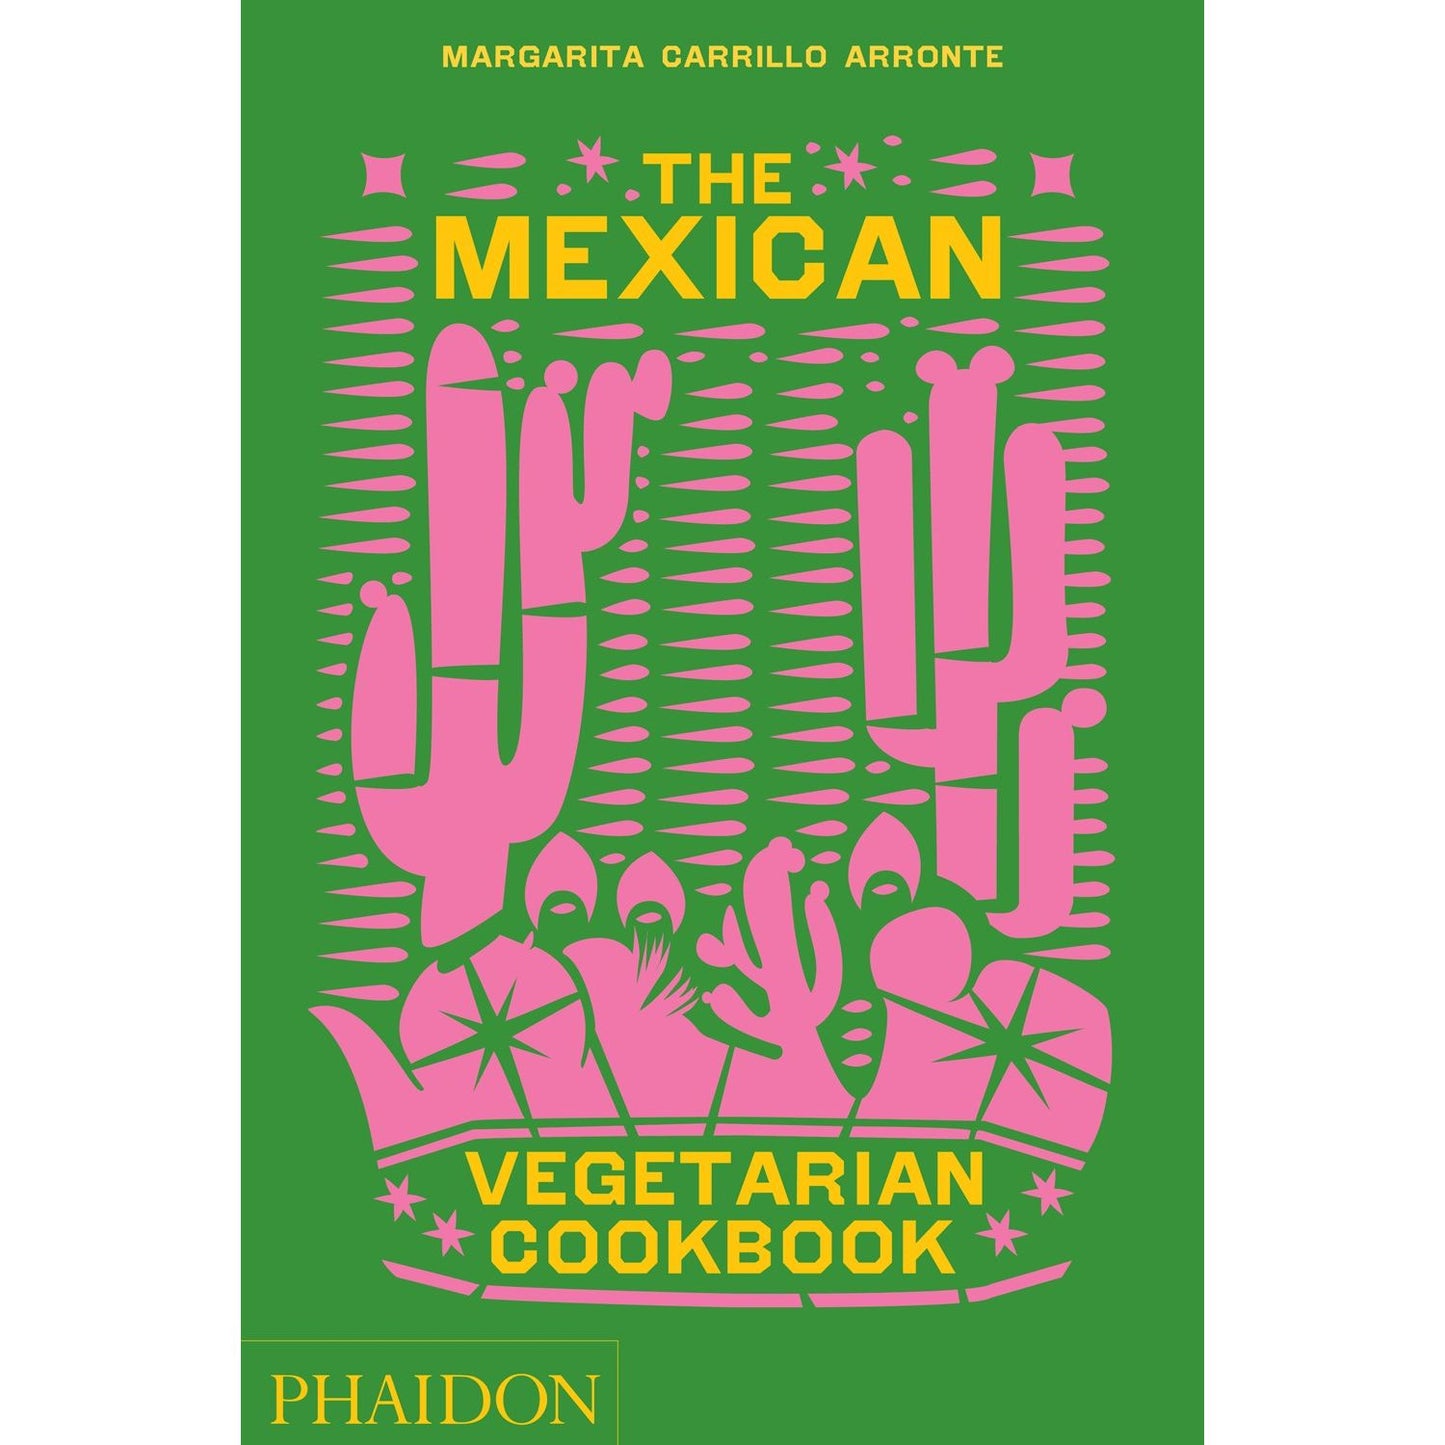 The Mexican Vegetarian Cookbook (Margarita Carrillo Arronte)